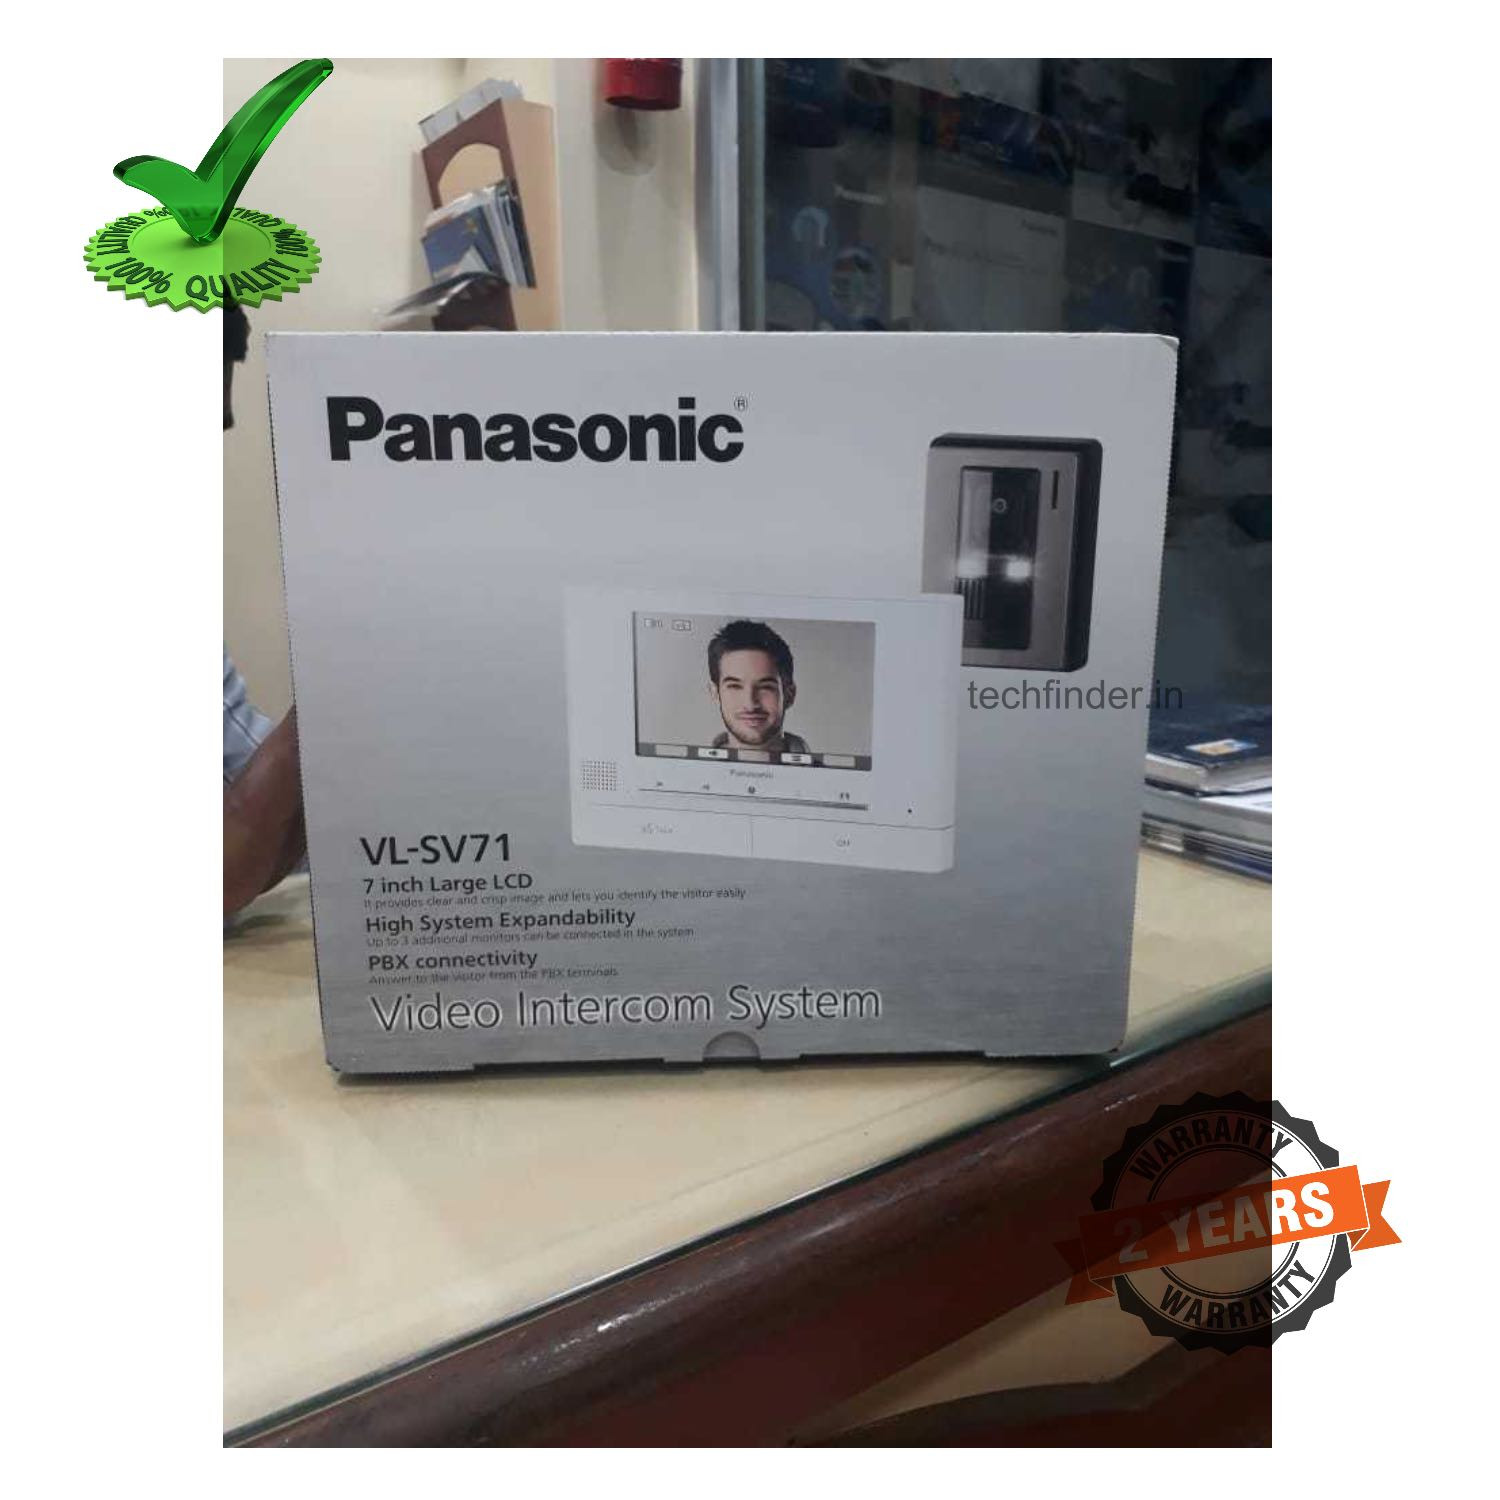 Panasonic VL-SV71 Hd Video Intercom Systems